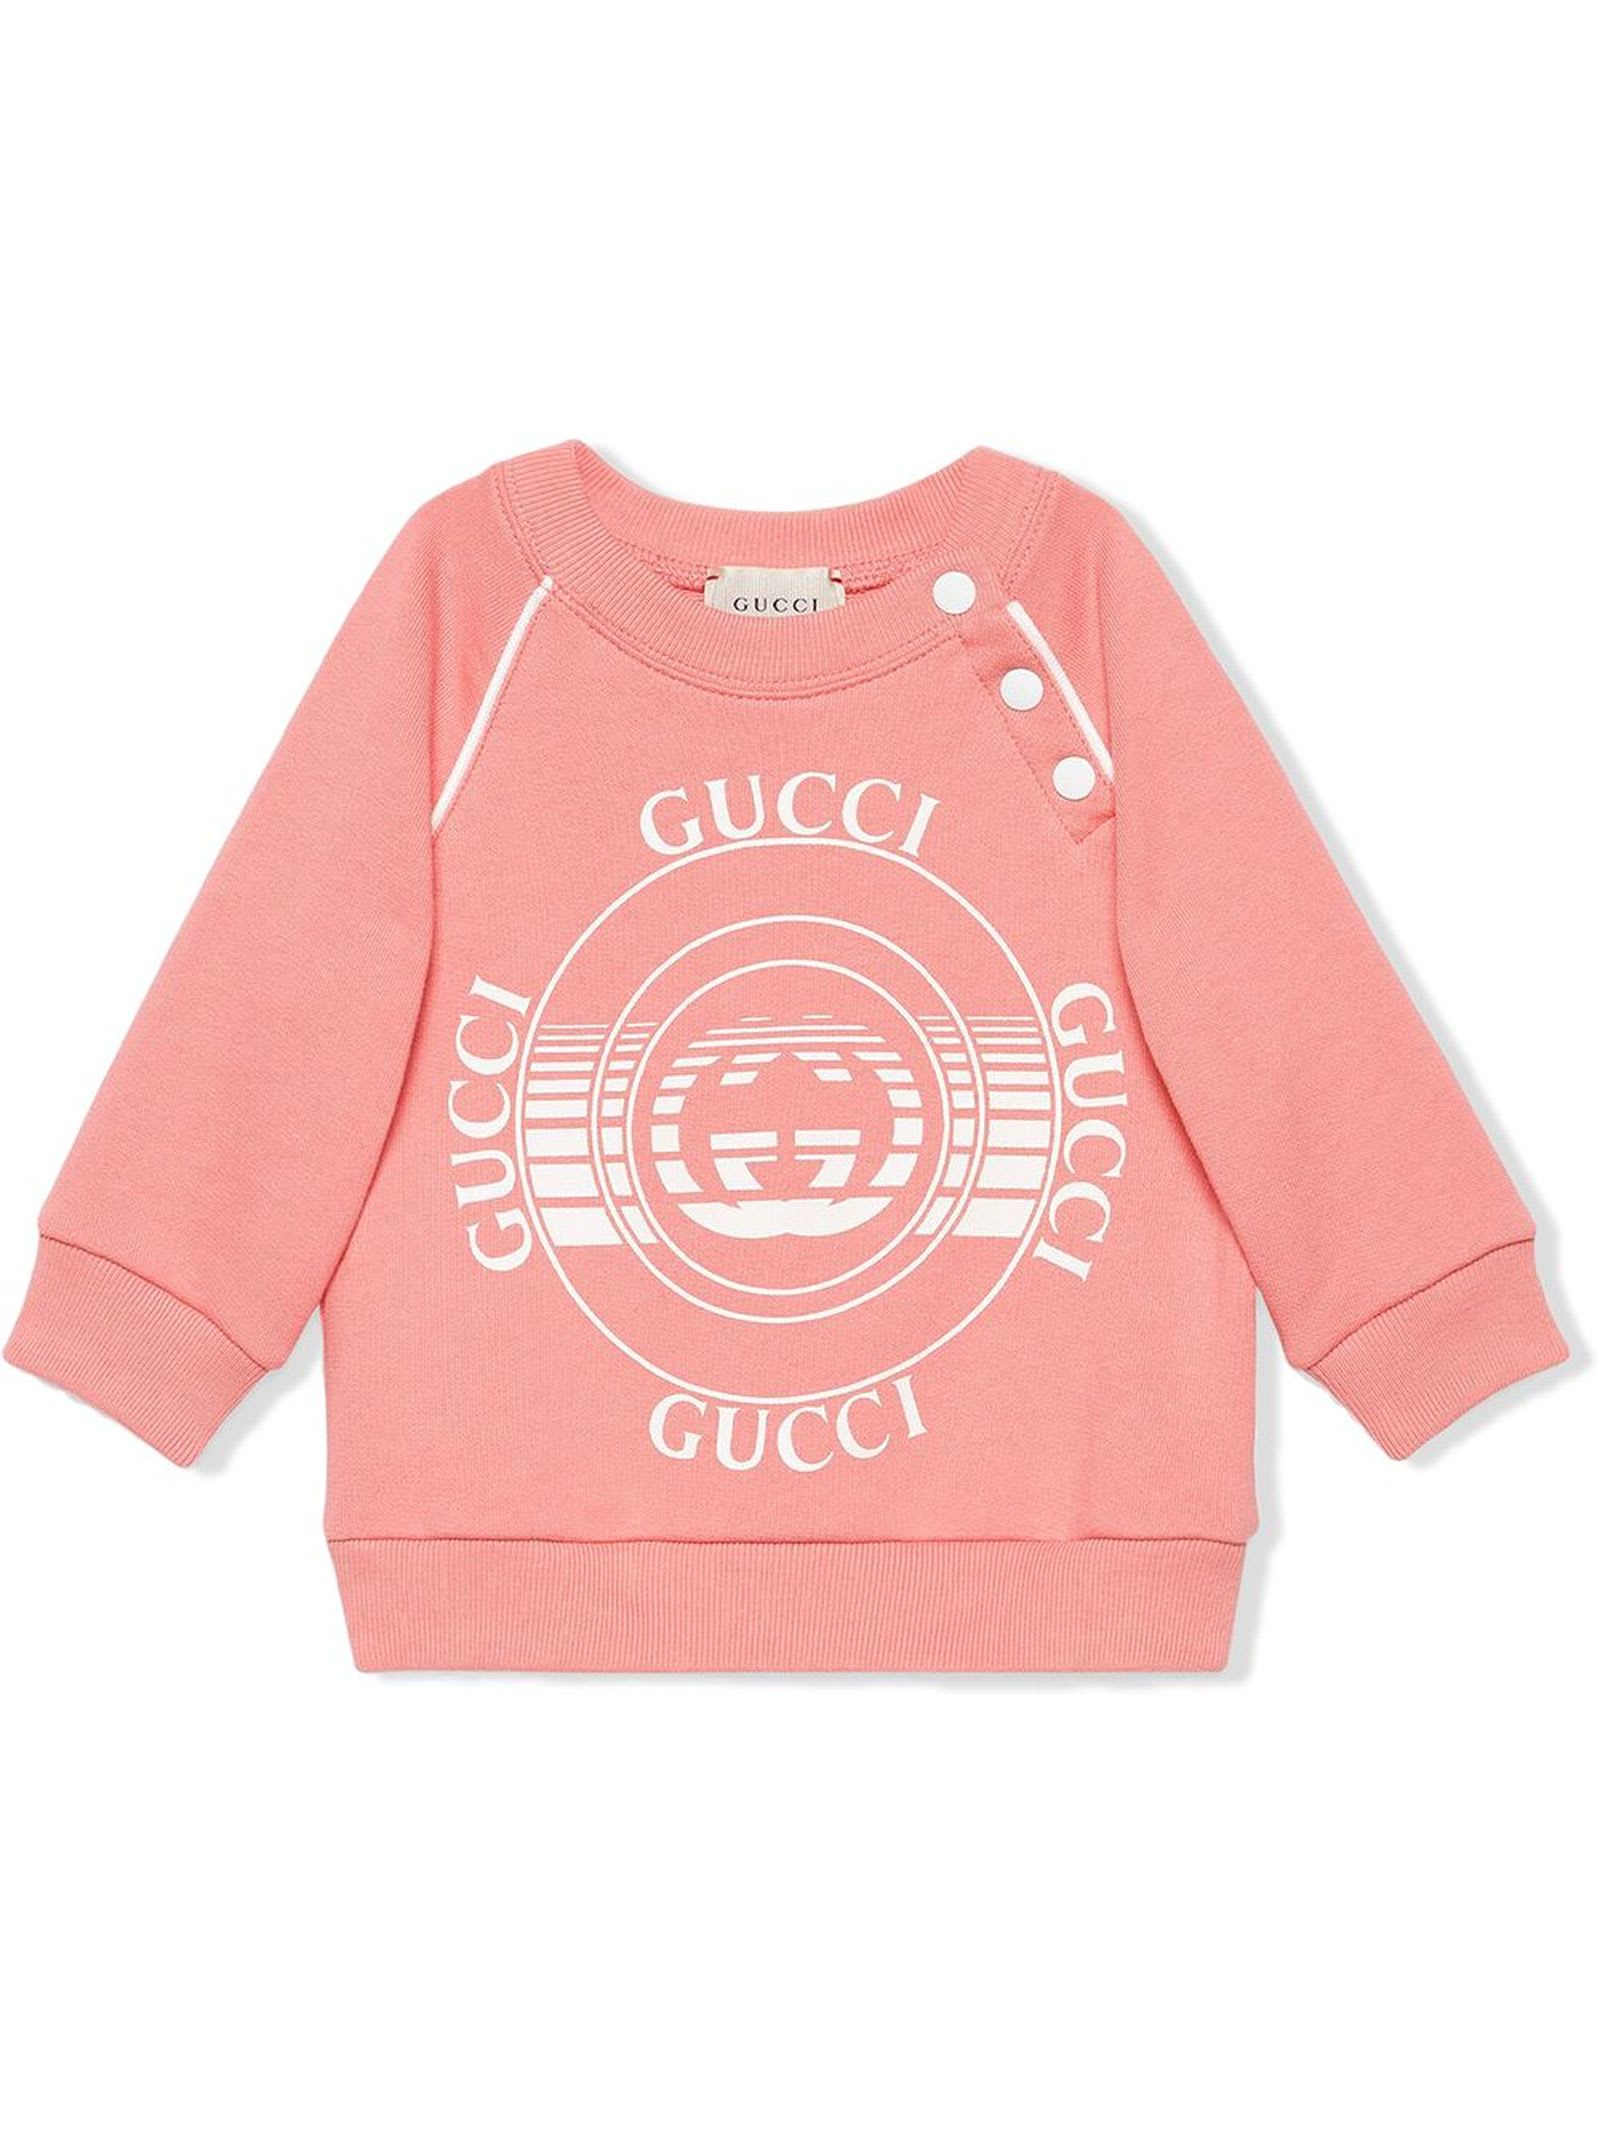 Gucci Pink Organic Cotton Sweatshirt